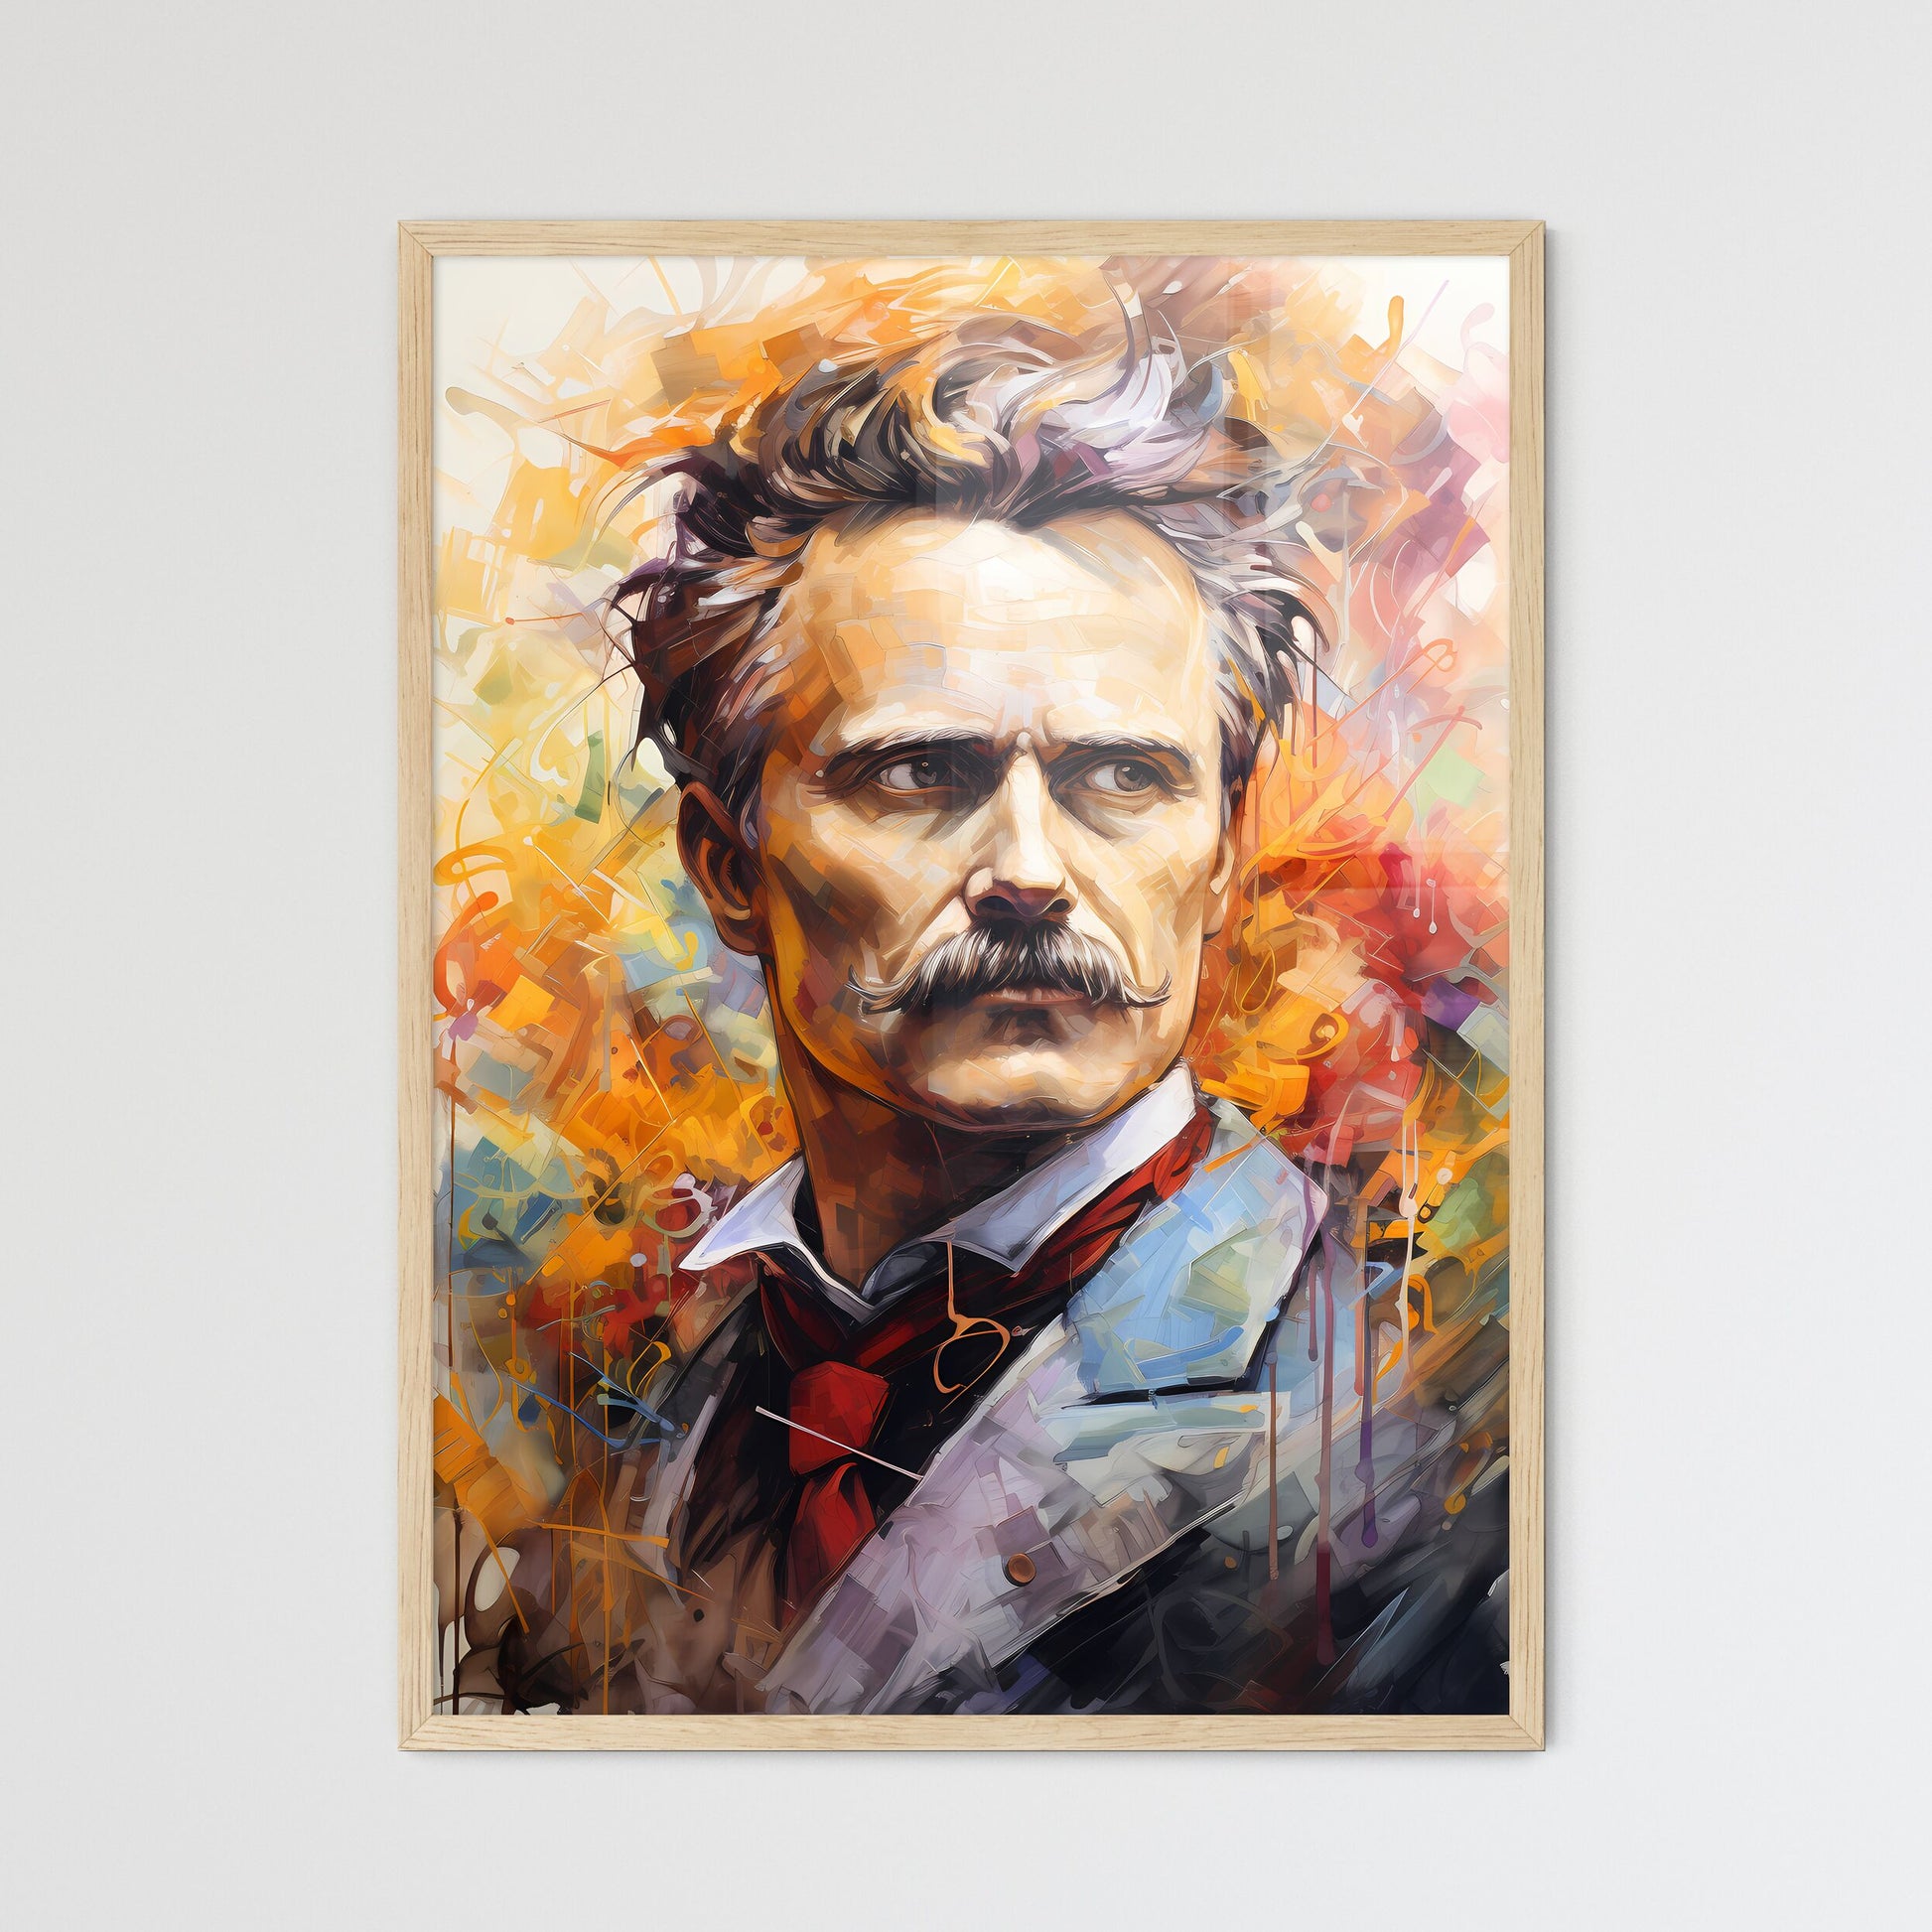 Friedrich Wilhelm Nietzsche German Philosopher - A Man With A Mustache Default Title